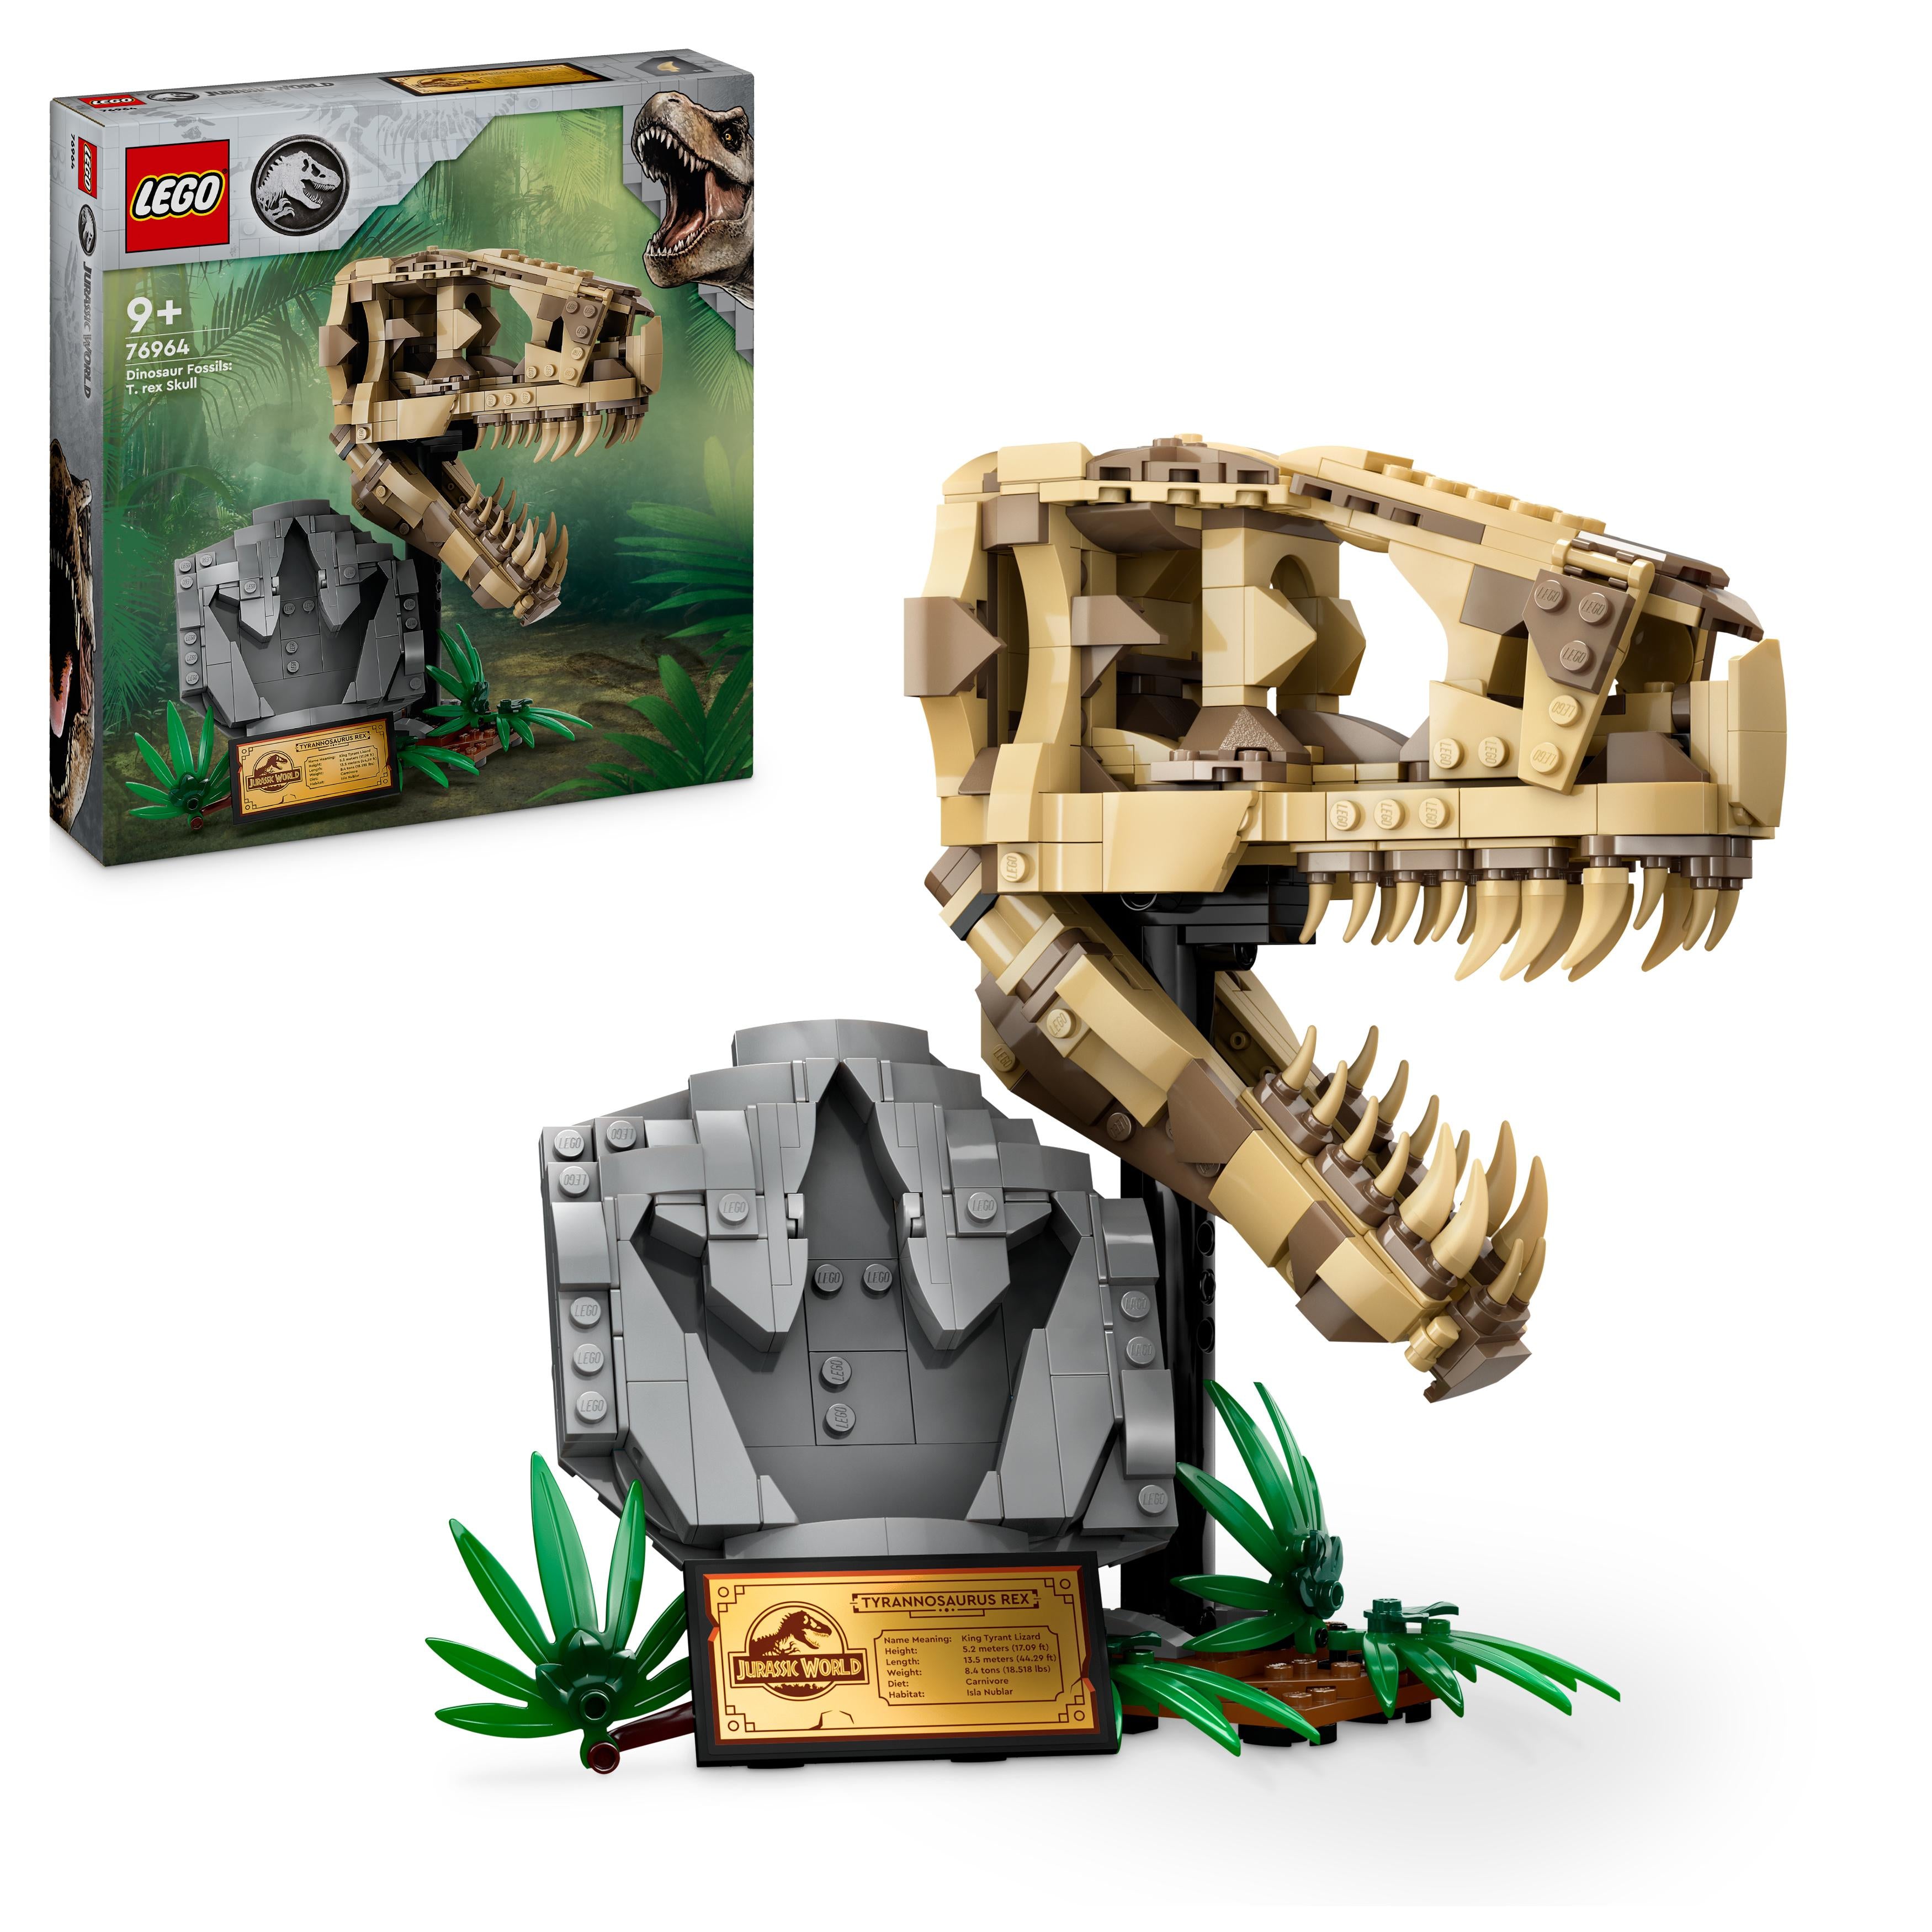 Lego 76964 Dinosaur Fossils T-rex